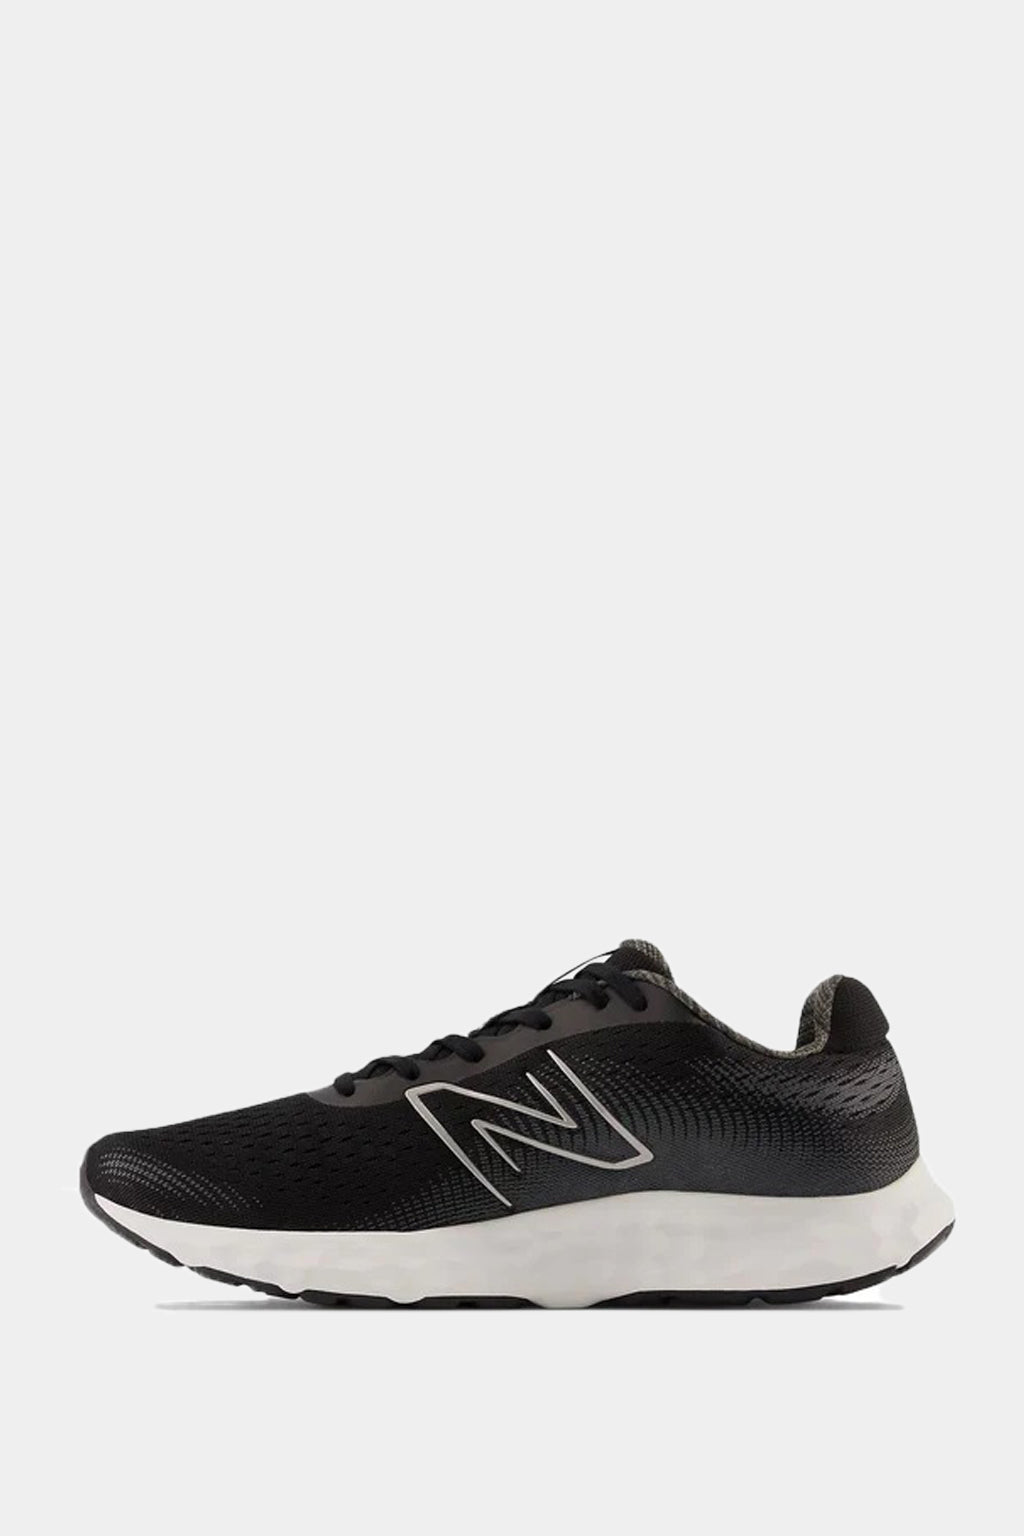 New Balance - M520LB8 Running Shoes